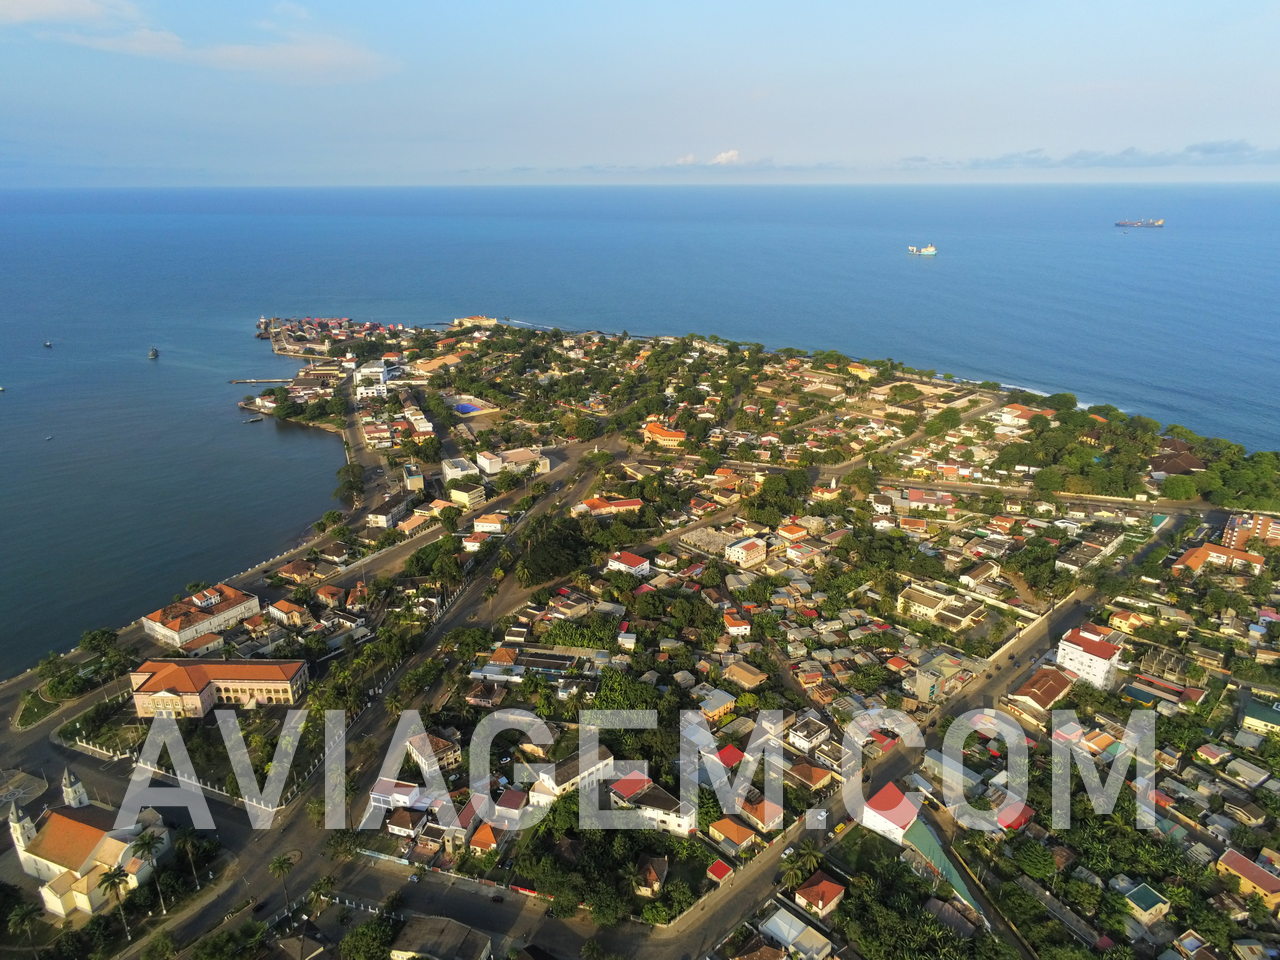 Sao Tome, capital city of Sao Tome and Principe